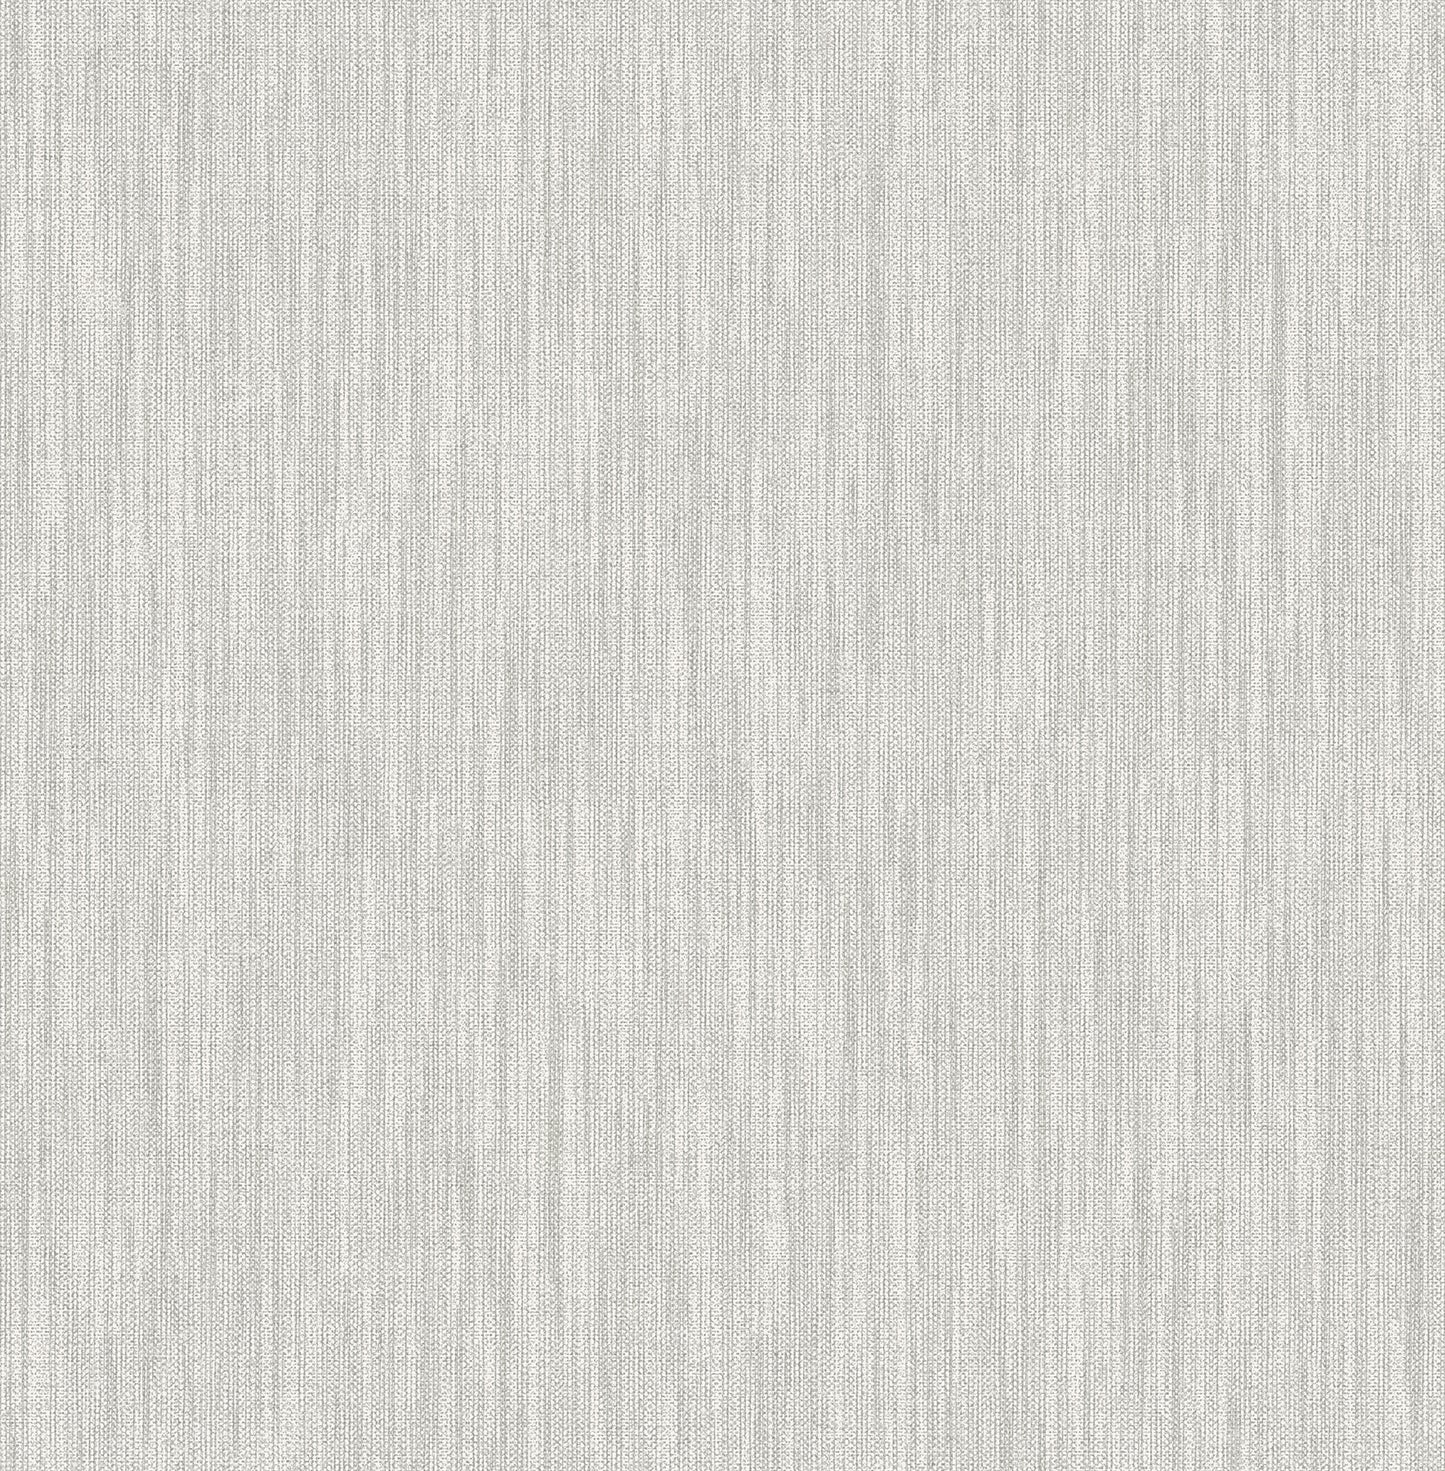 Buy 2948-25288 Spring Chiniile Grey Linen Texture Grey A-Street Prints Wallpaper